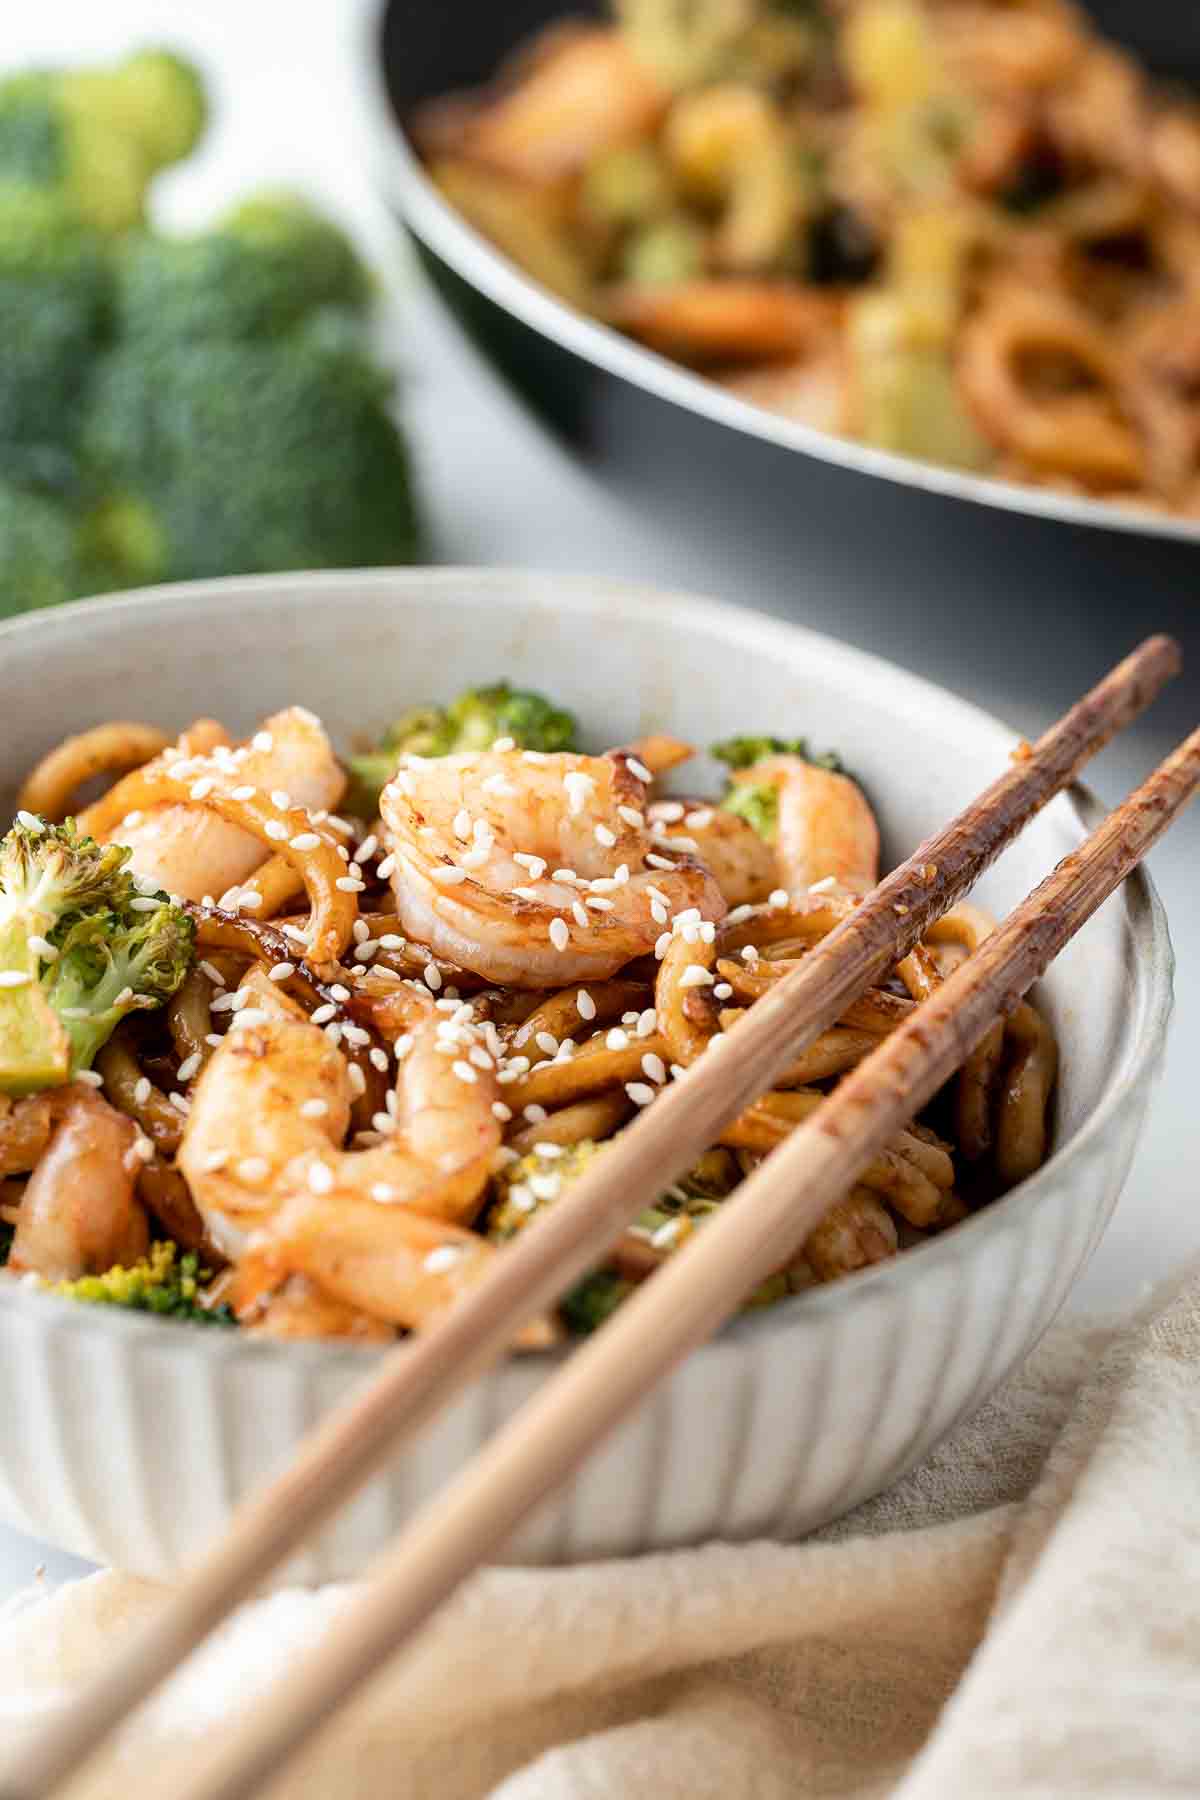 Garlic prawn noodles in a white bowl with chopsticks.